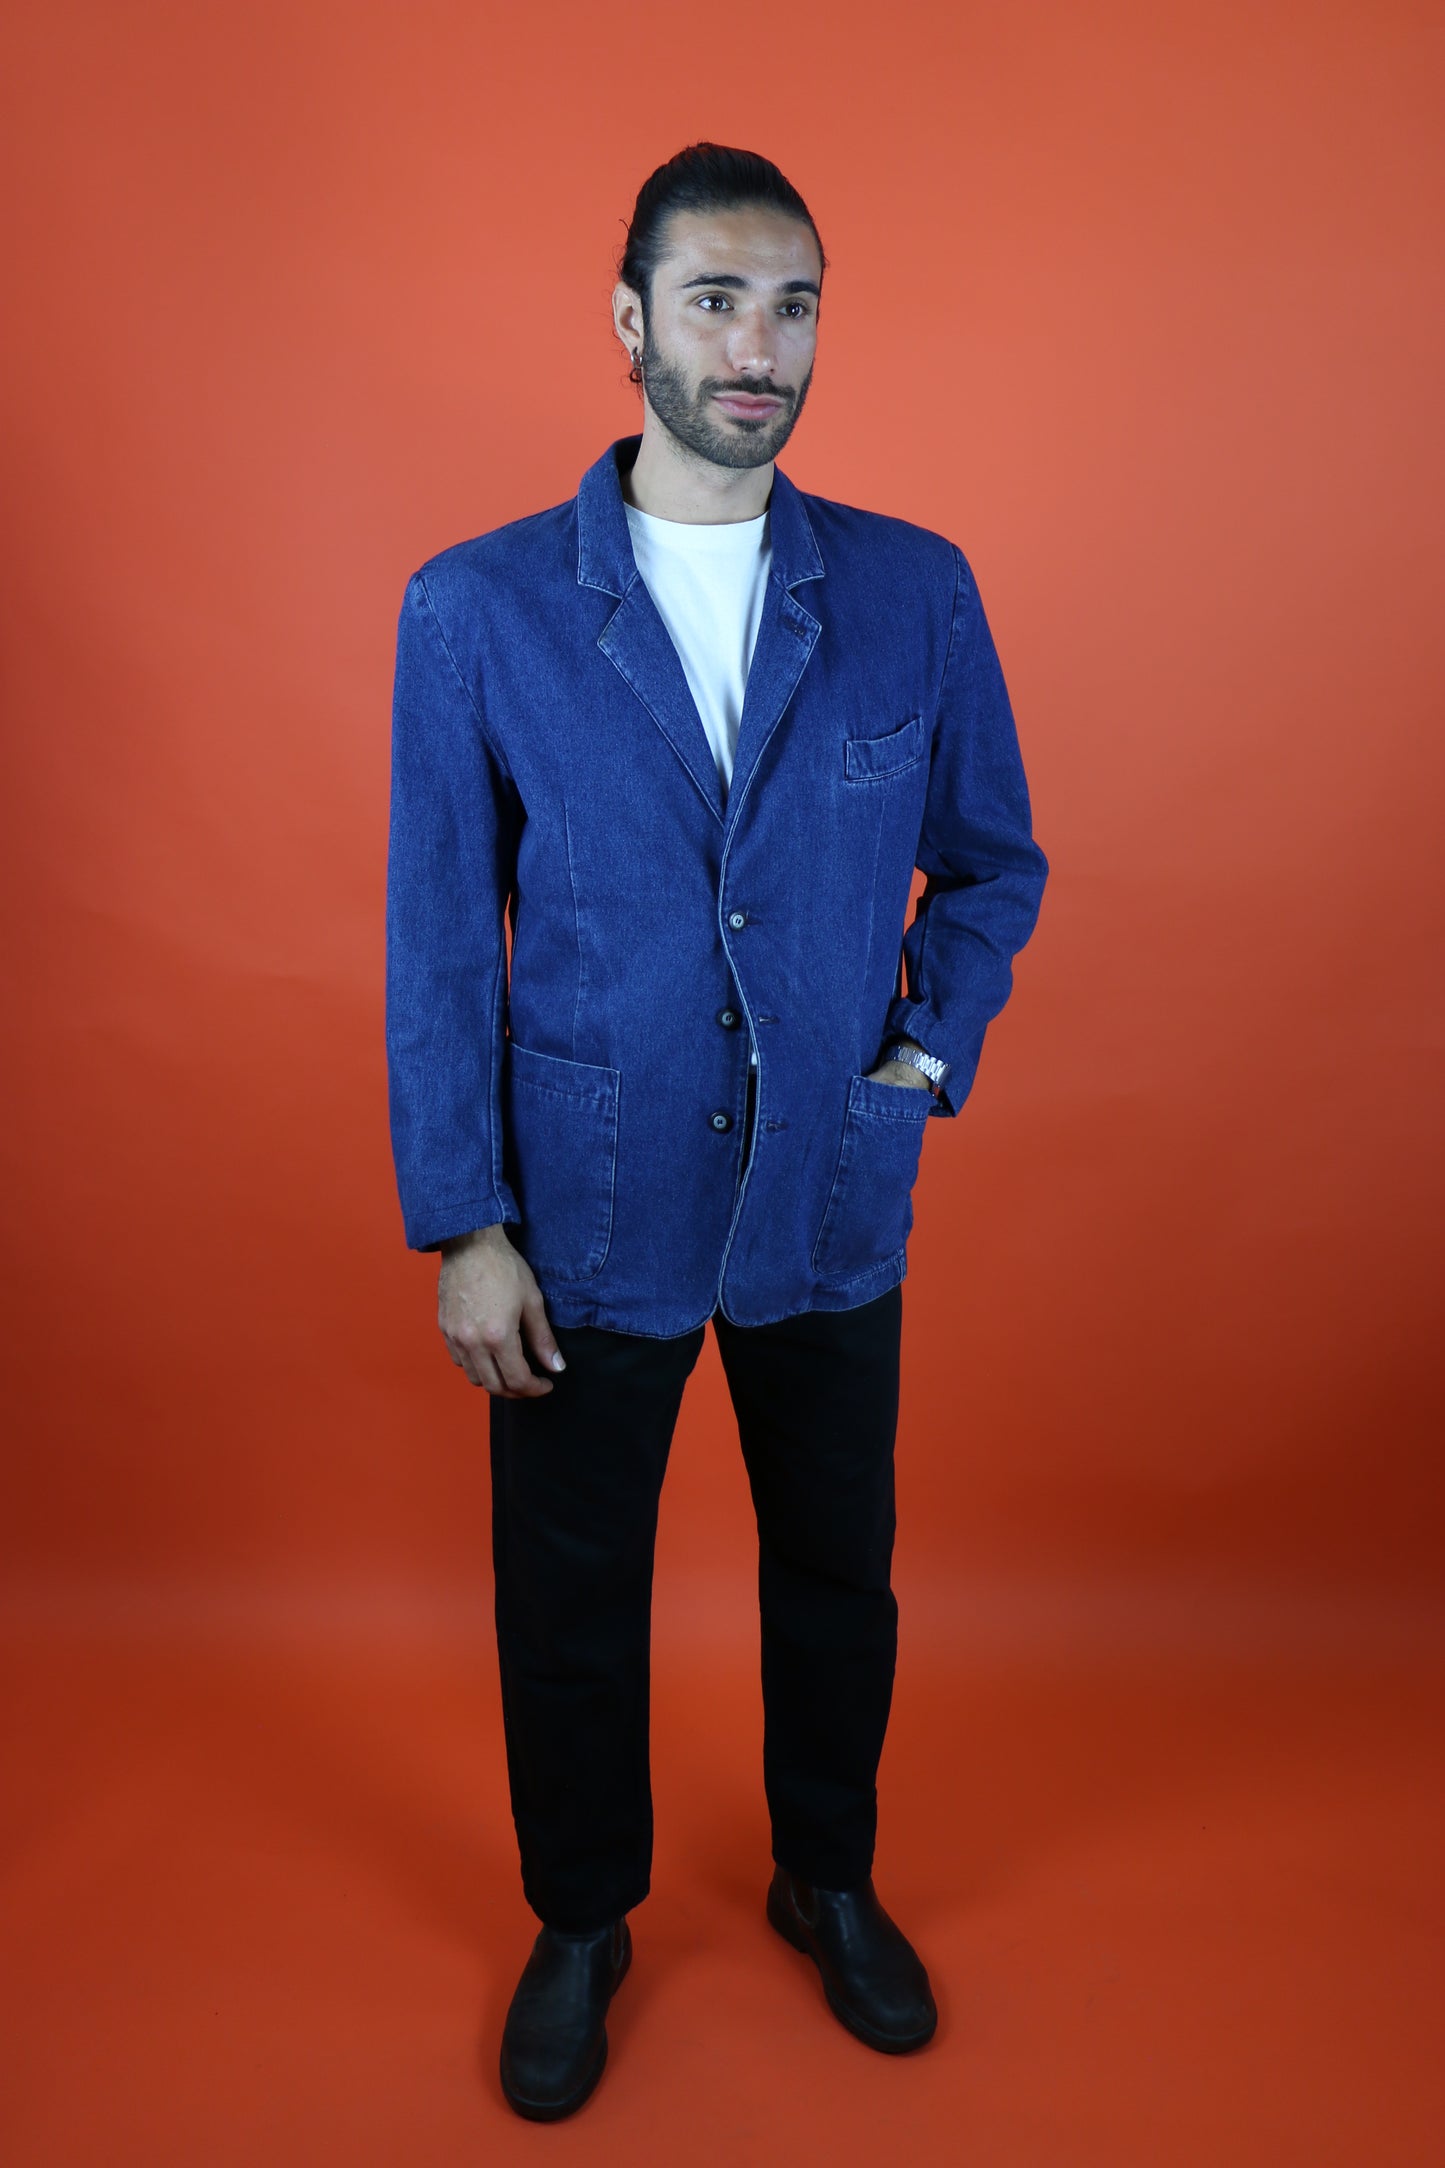 Yves Sant Laurent Denim Suit Jacket - vintage clothing clochard92.com